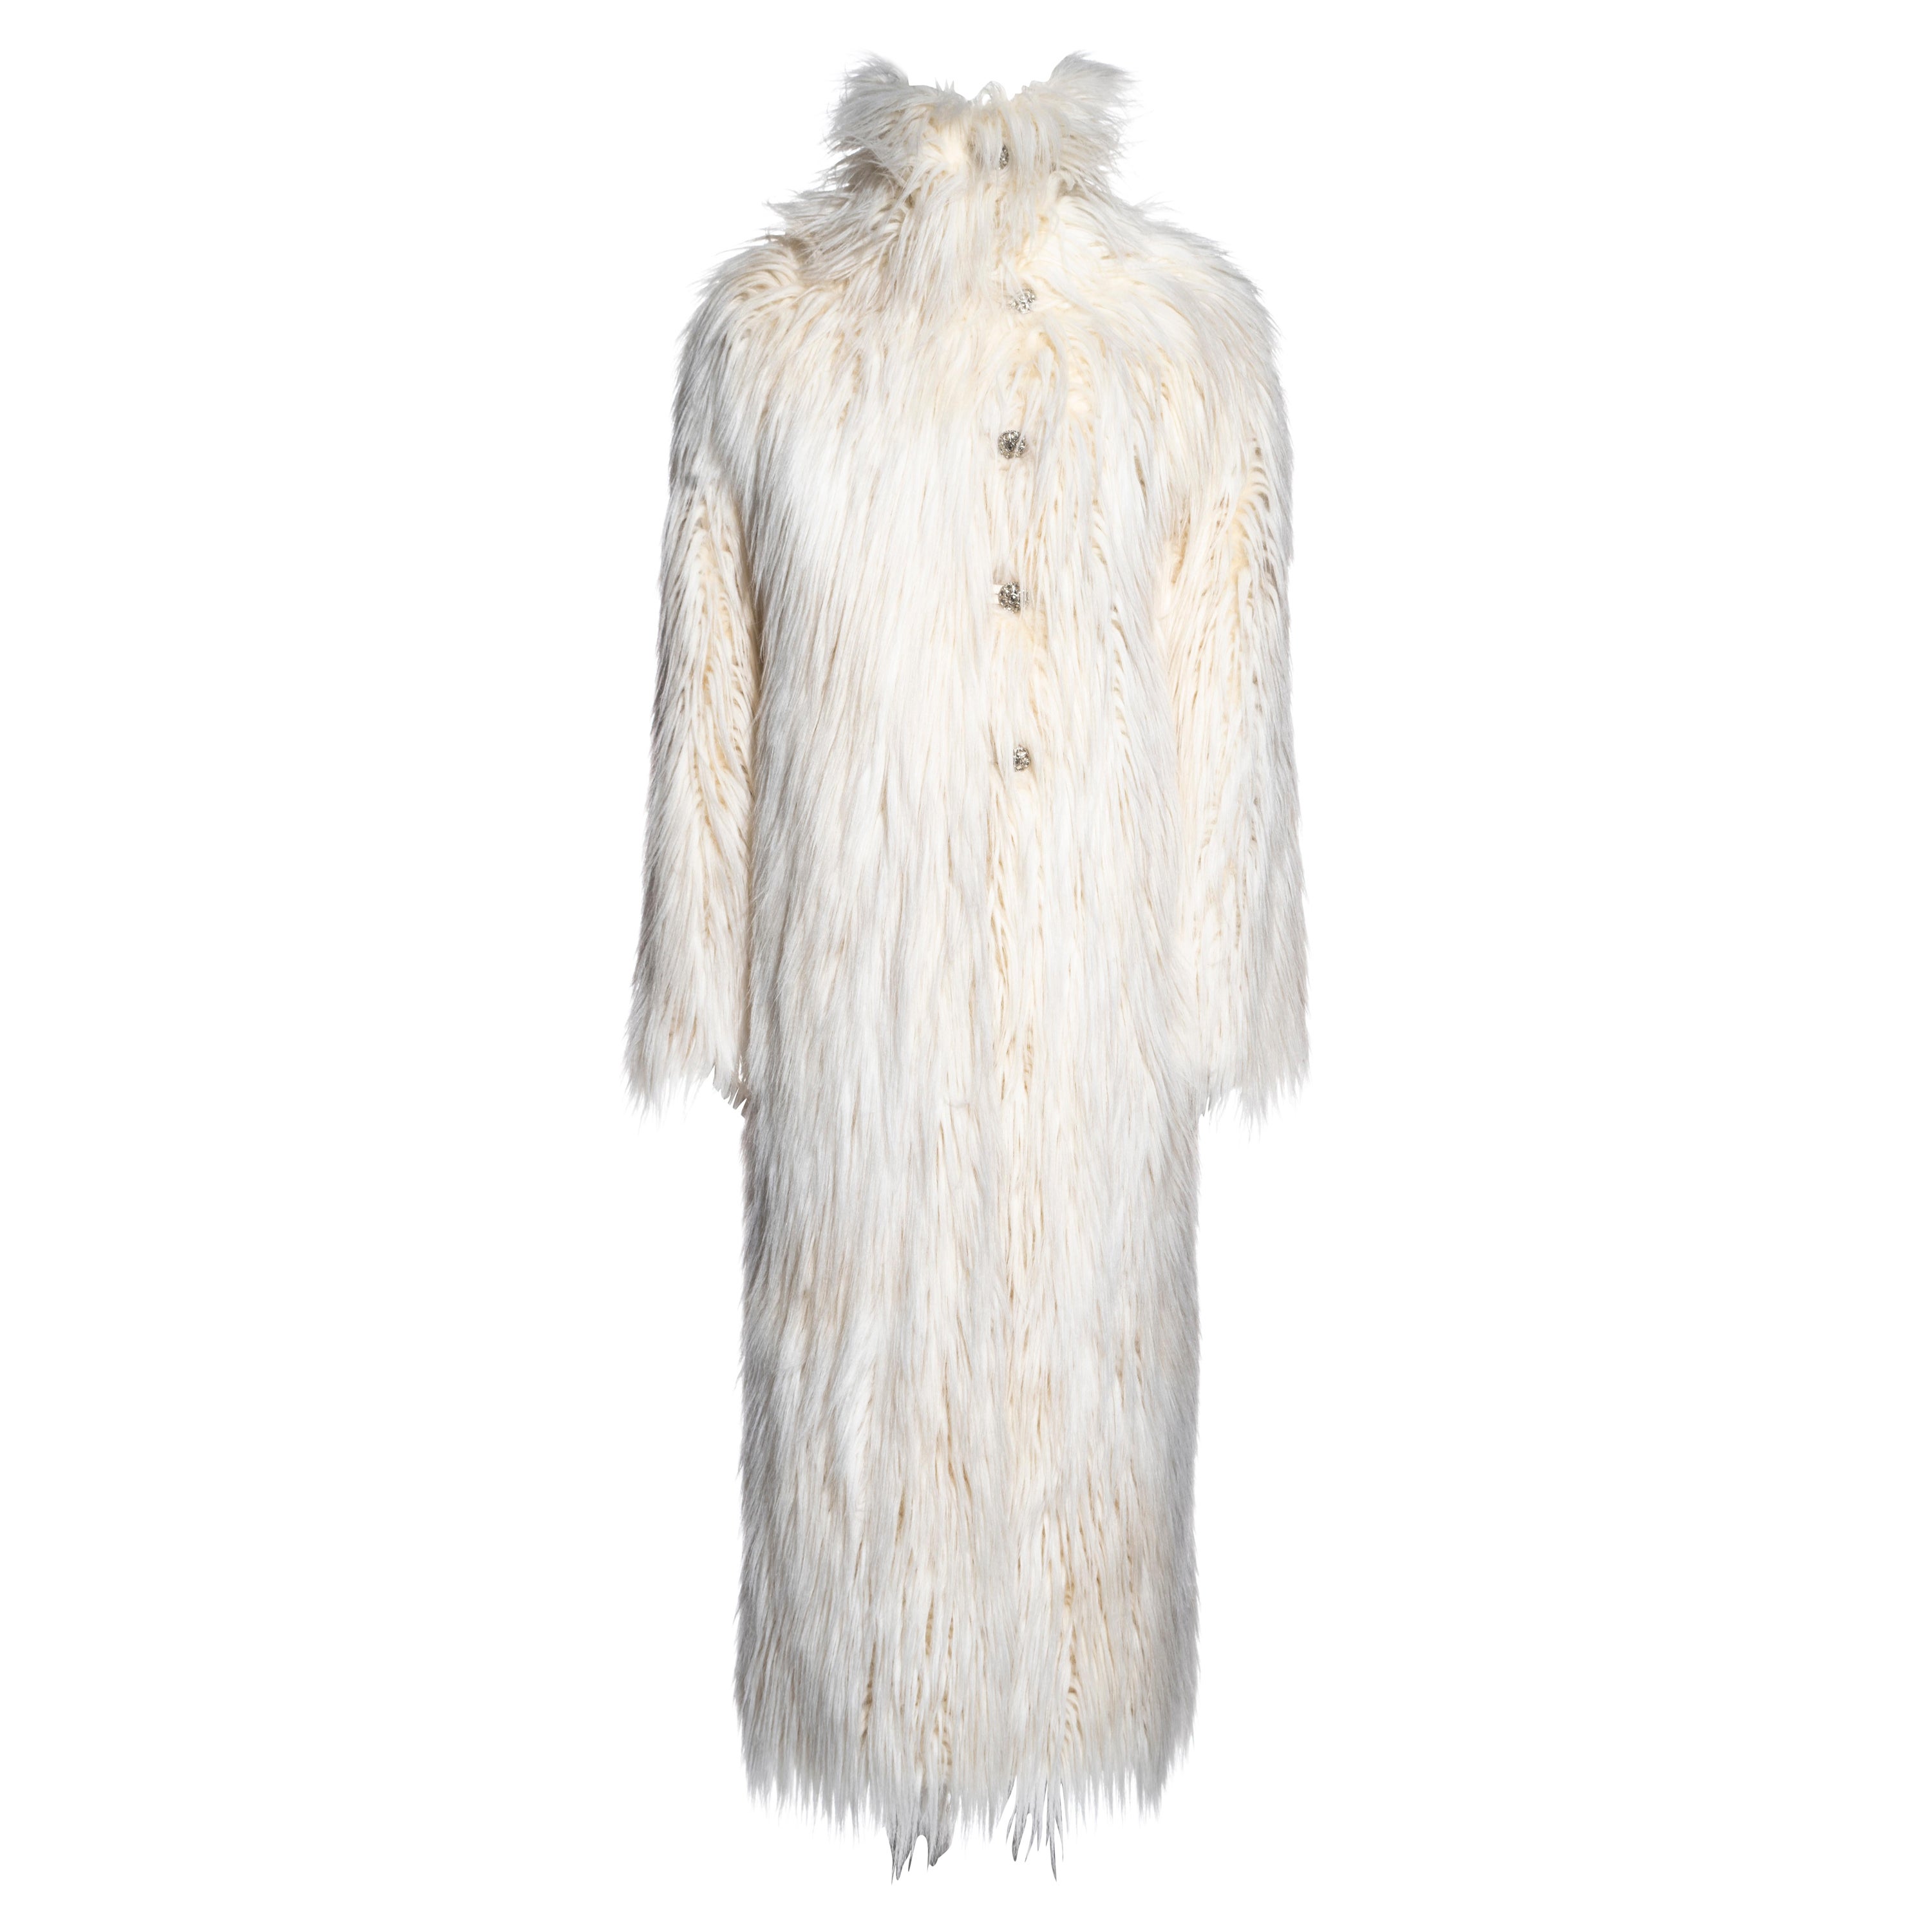 Chanel by Karl Lagerfeld cream full-length fantasy faux fur coat, fw 2010